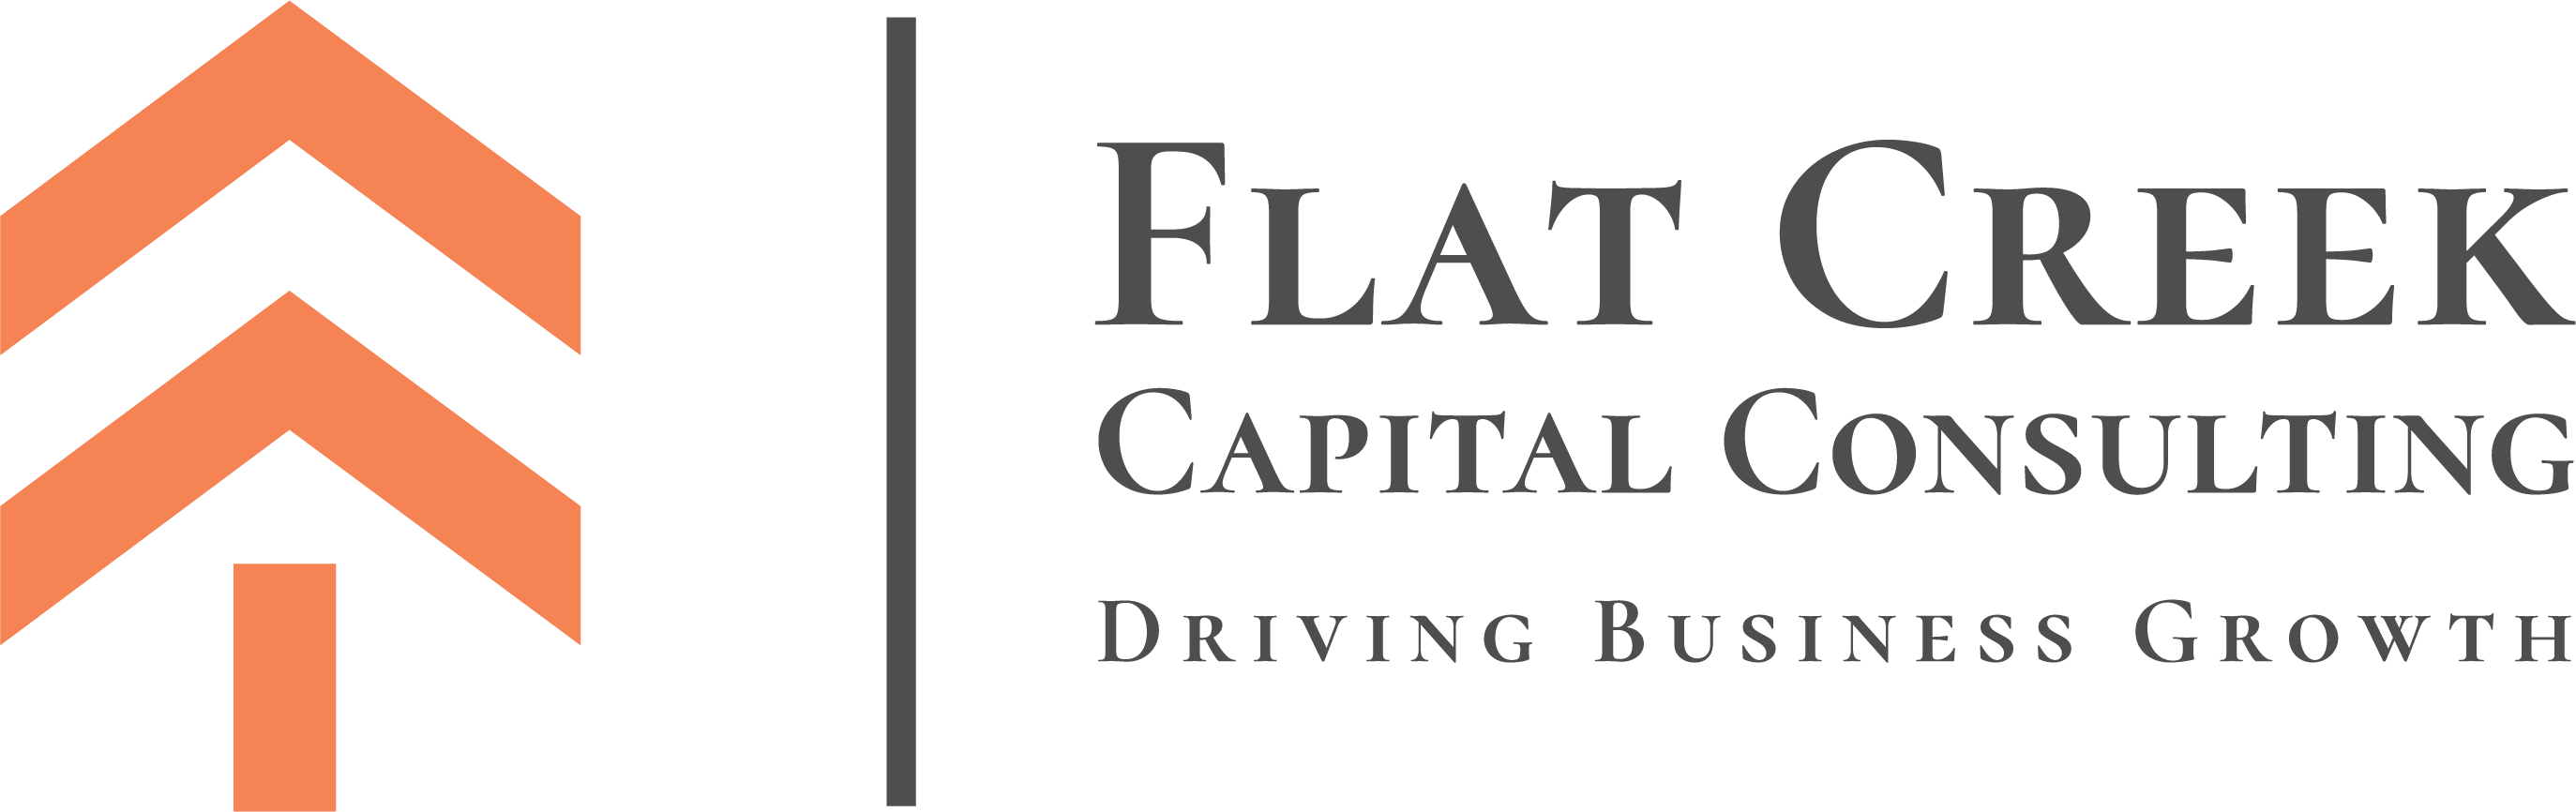 Flat Creek Capital Consulting